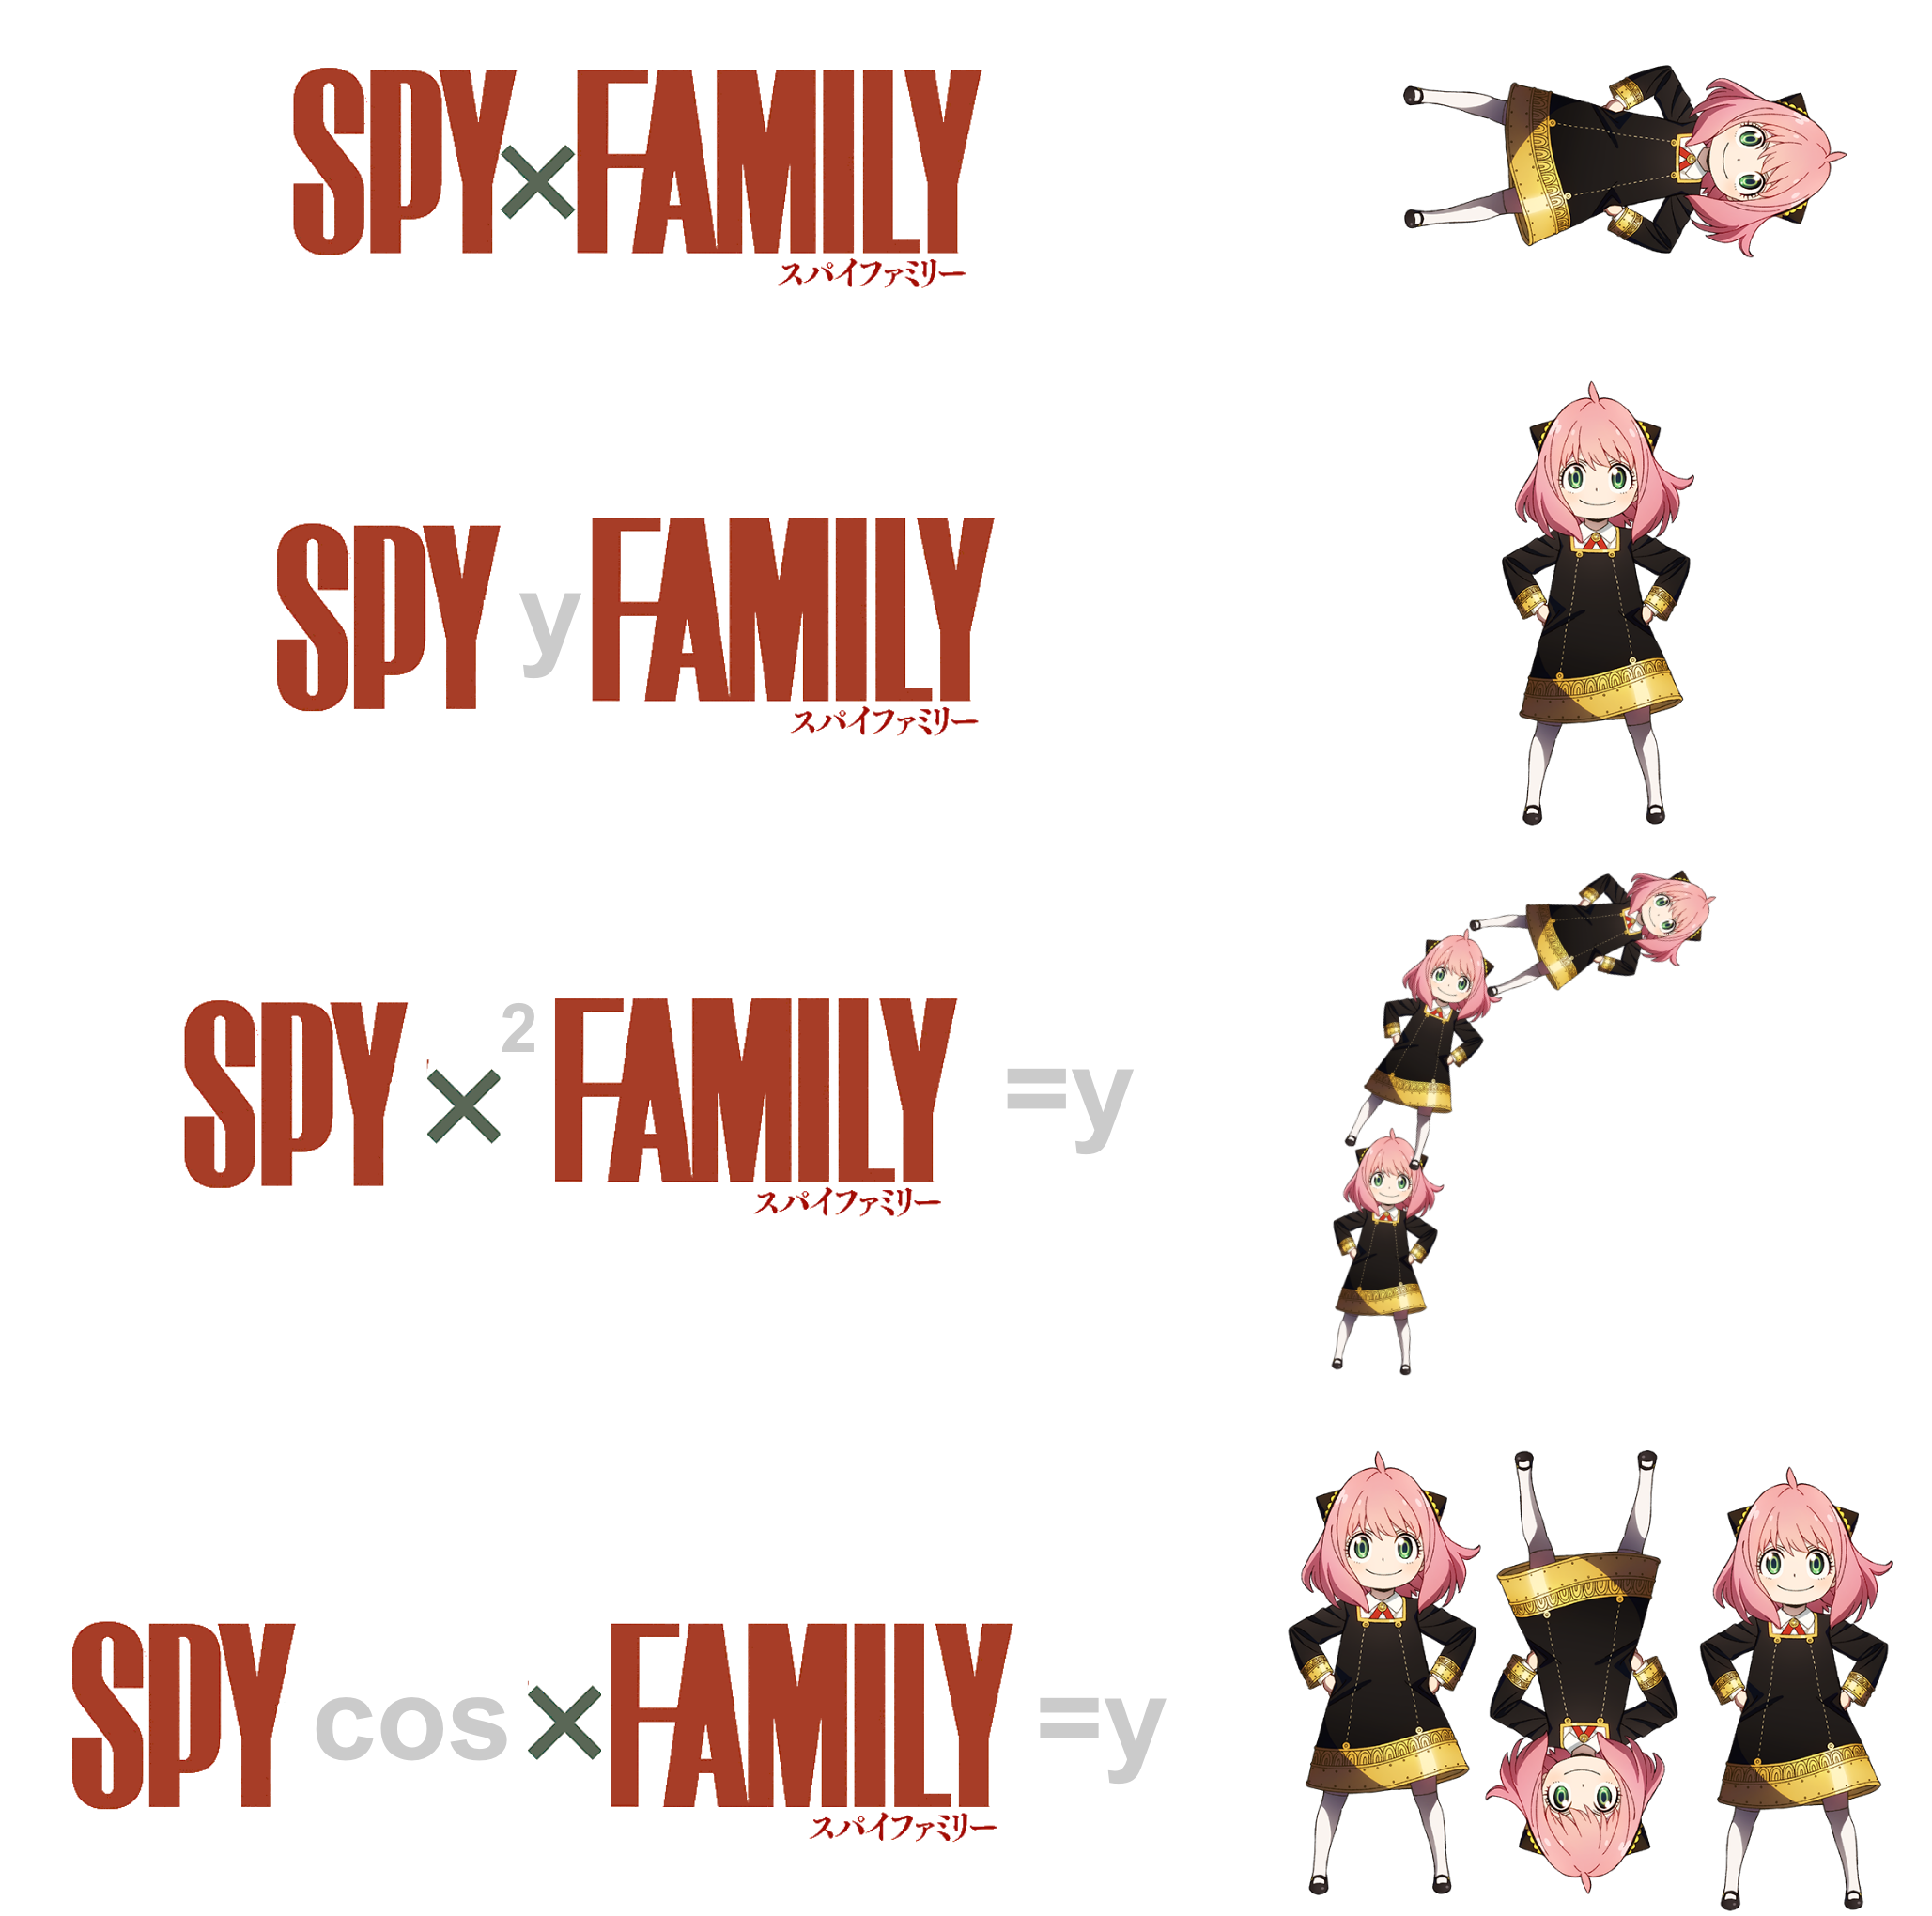 spy cos x family = y